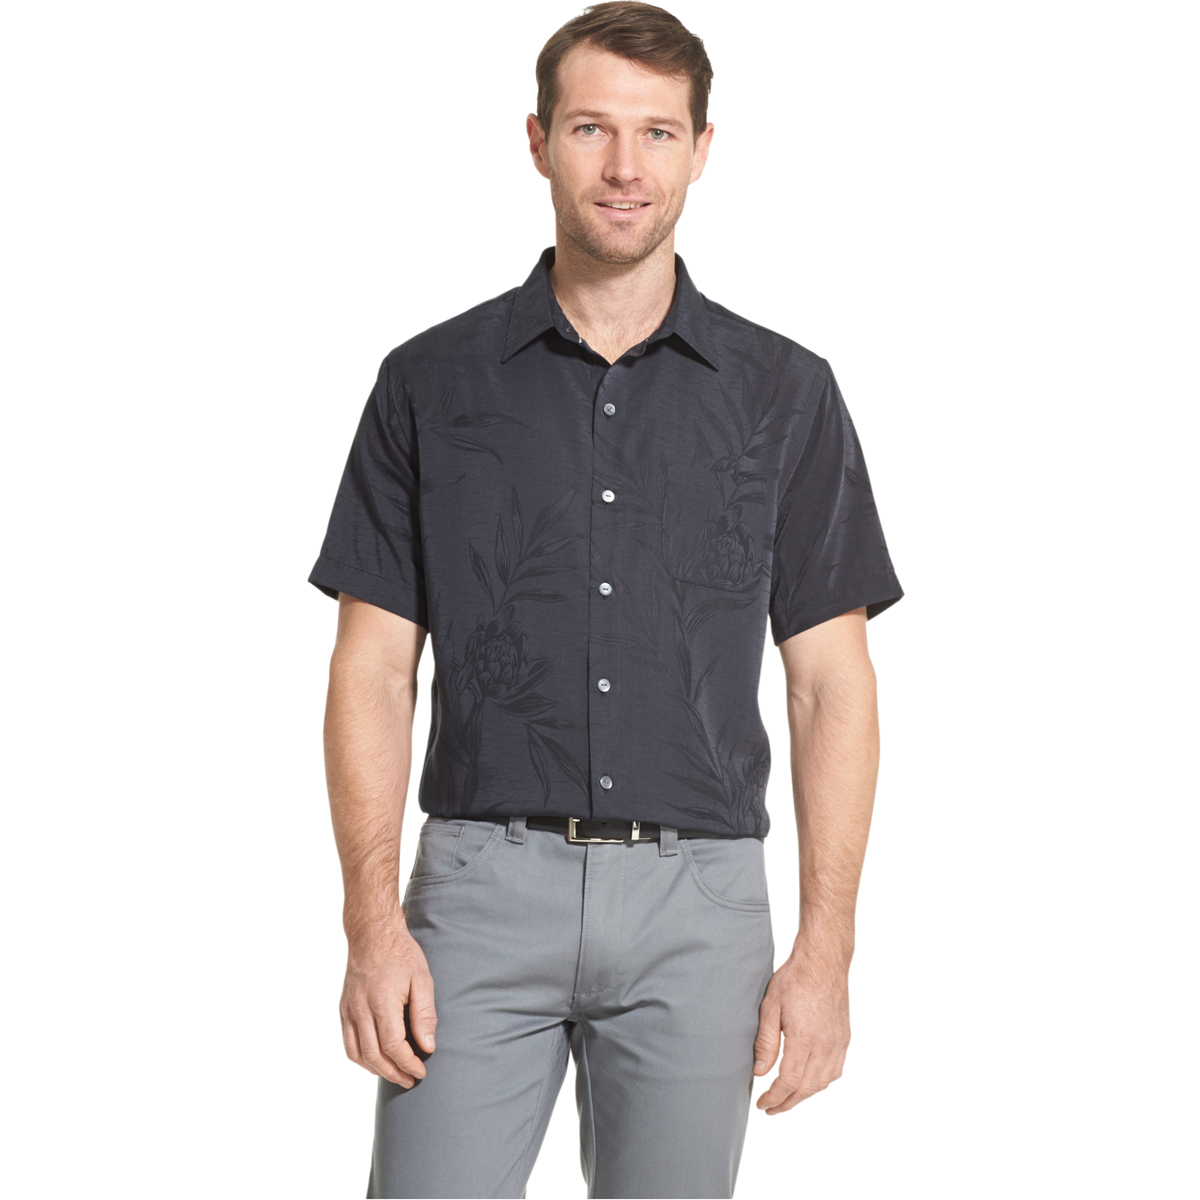 Van Heusen Men's Jaquard Short-Sleeve Shirt - Black, XL